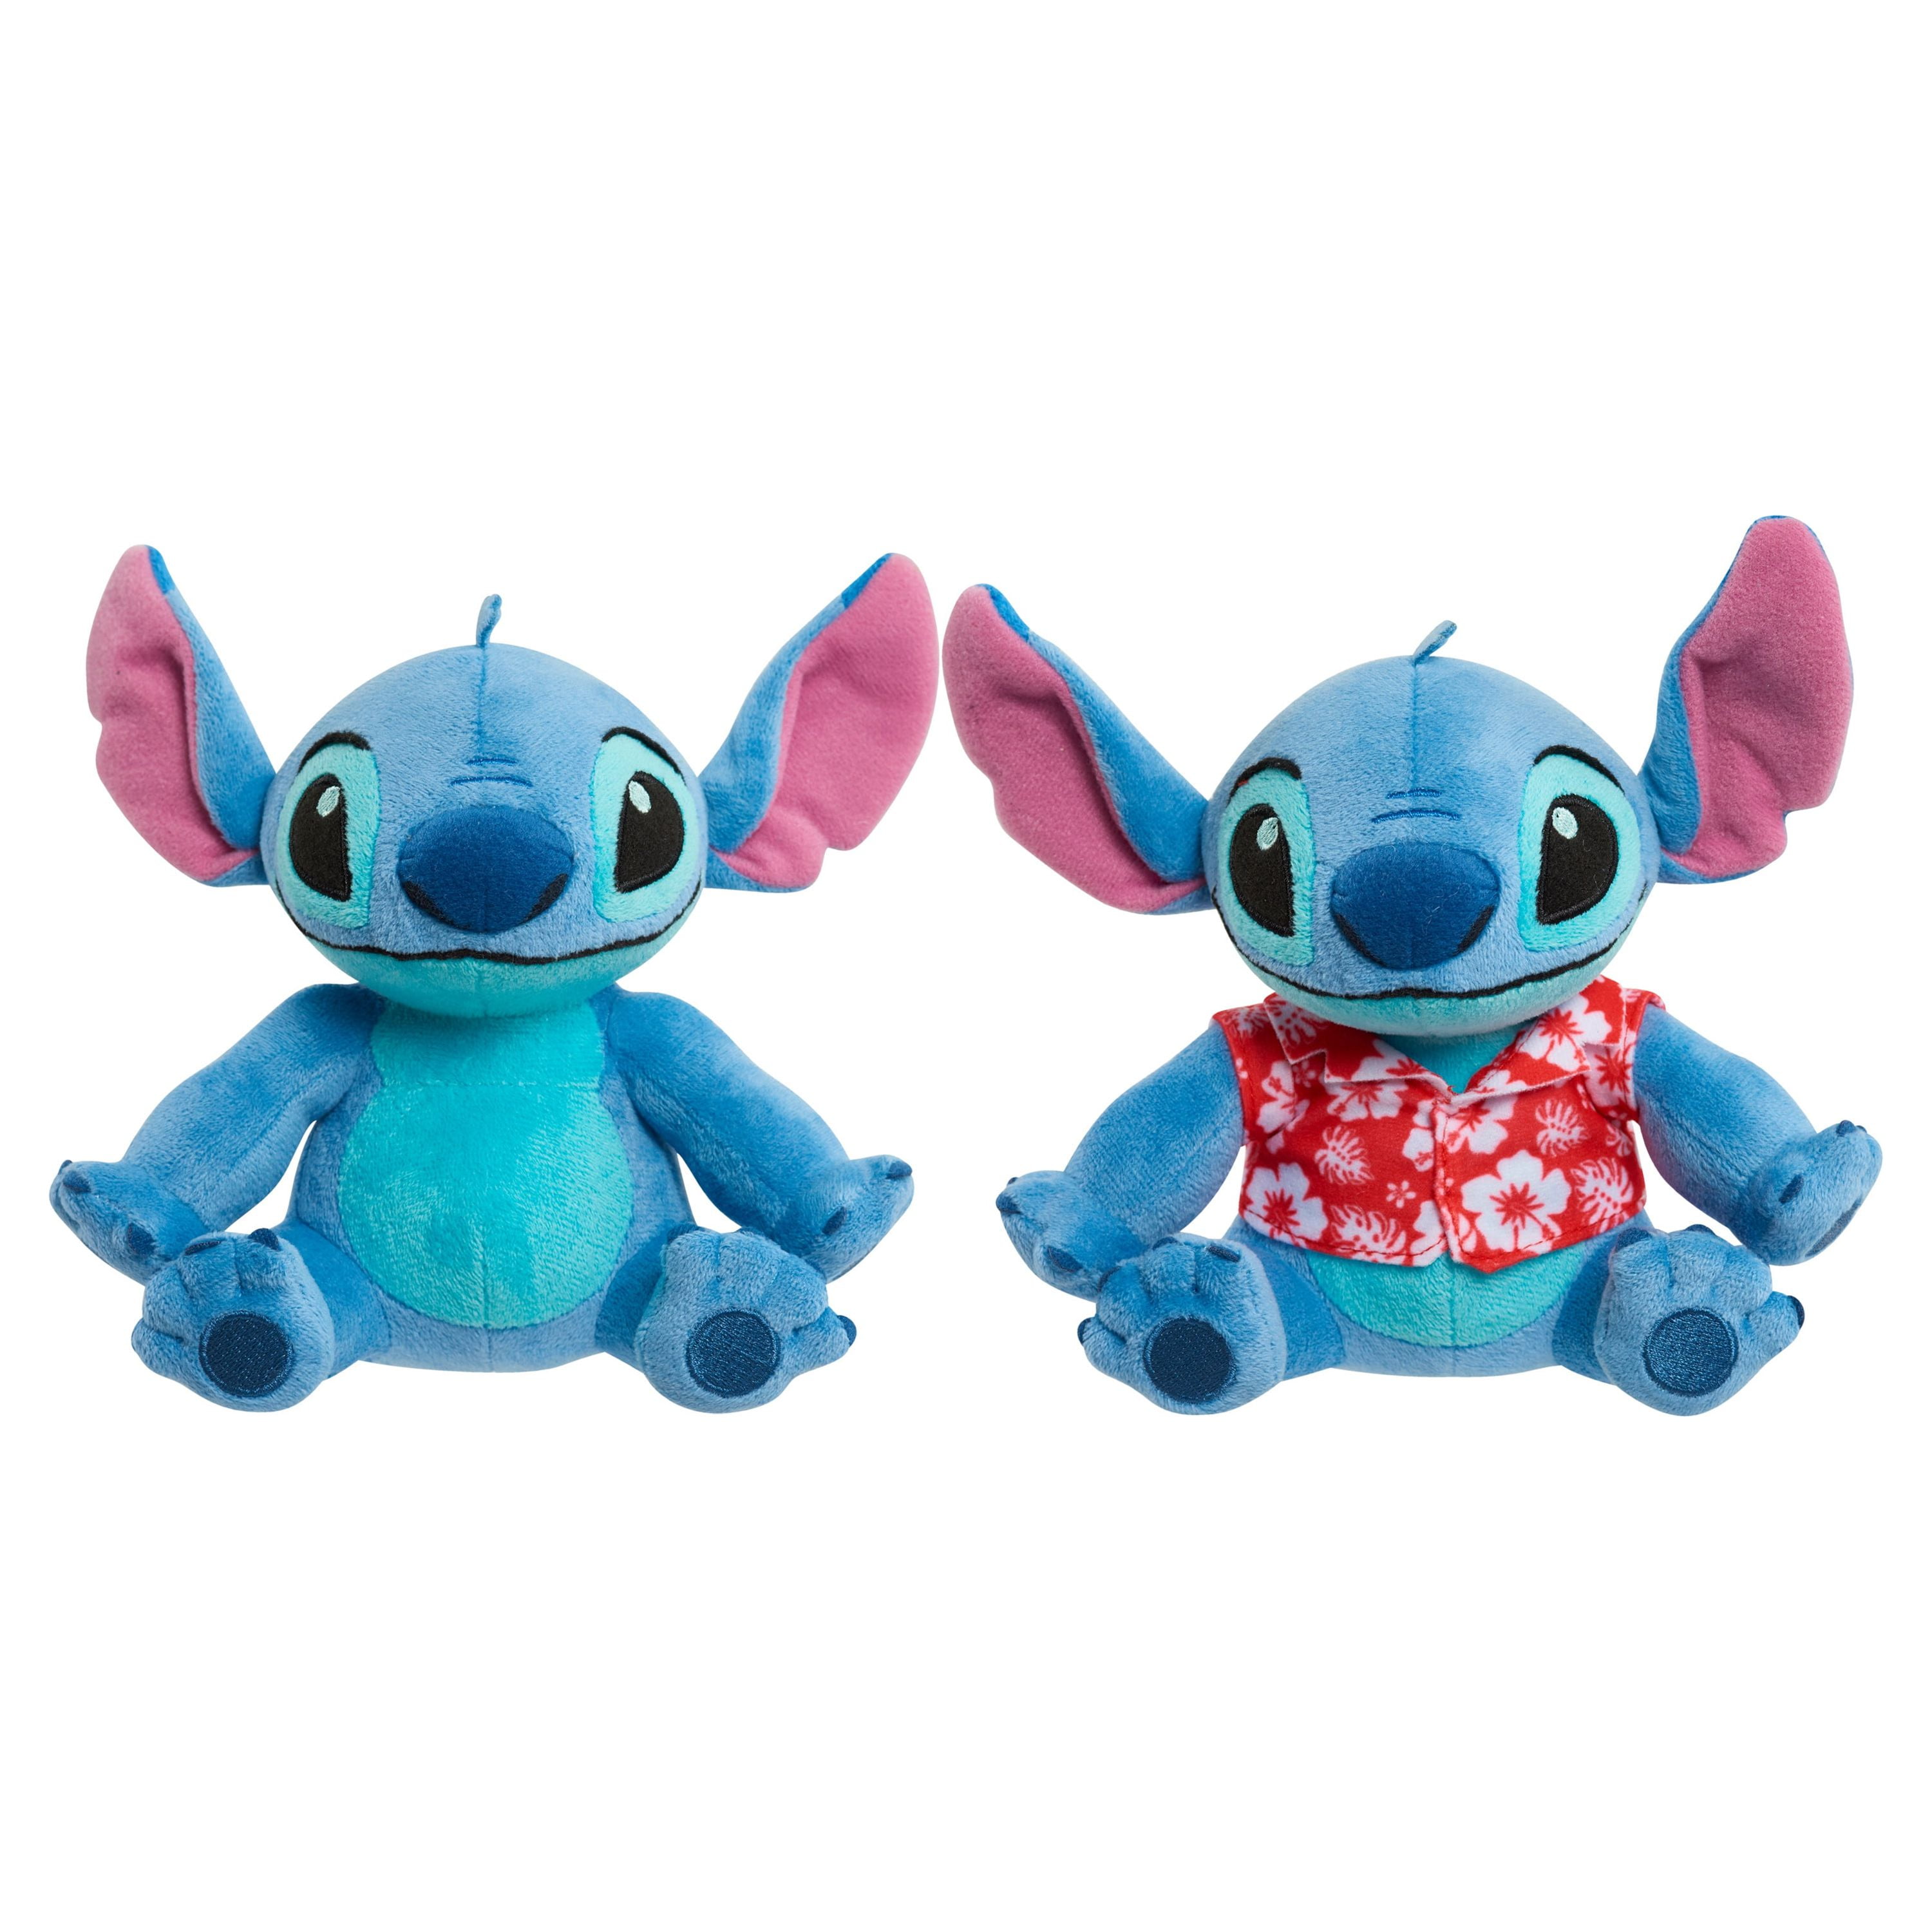 Disney Scrump 14 1/2 Plush Doll - Lilo & Stitch Brand New with